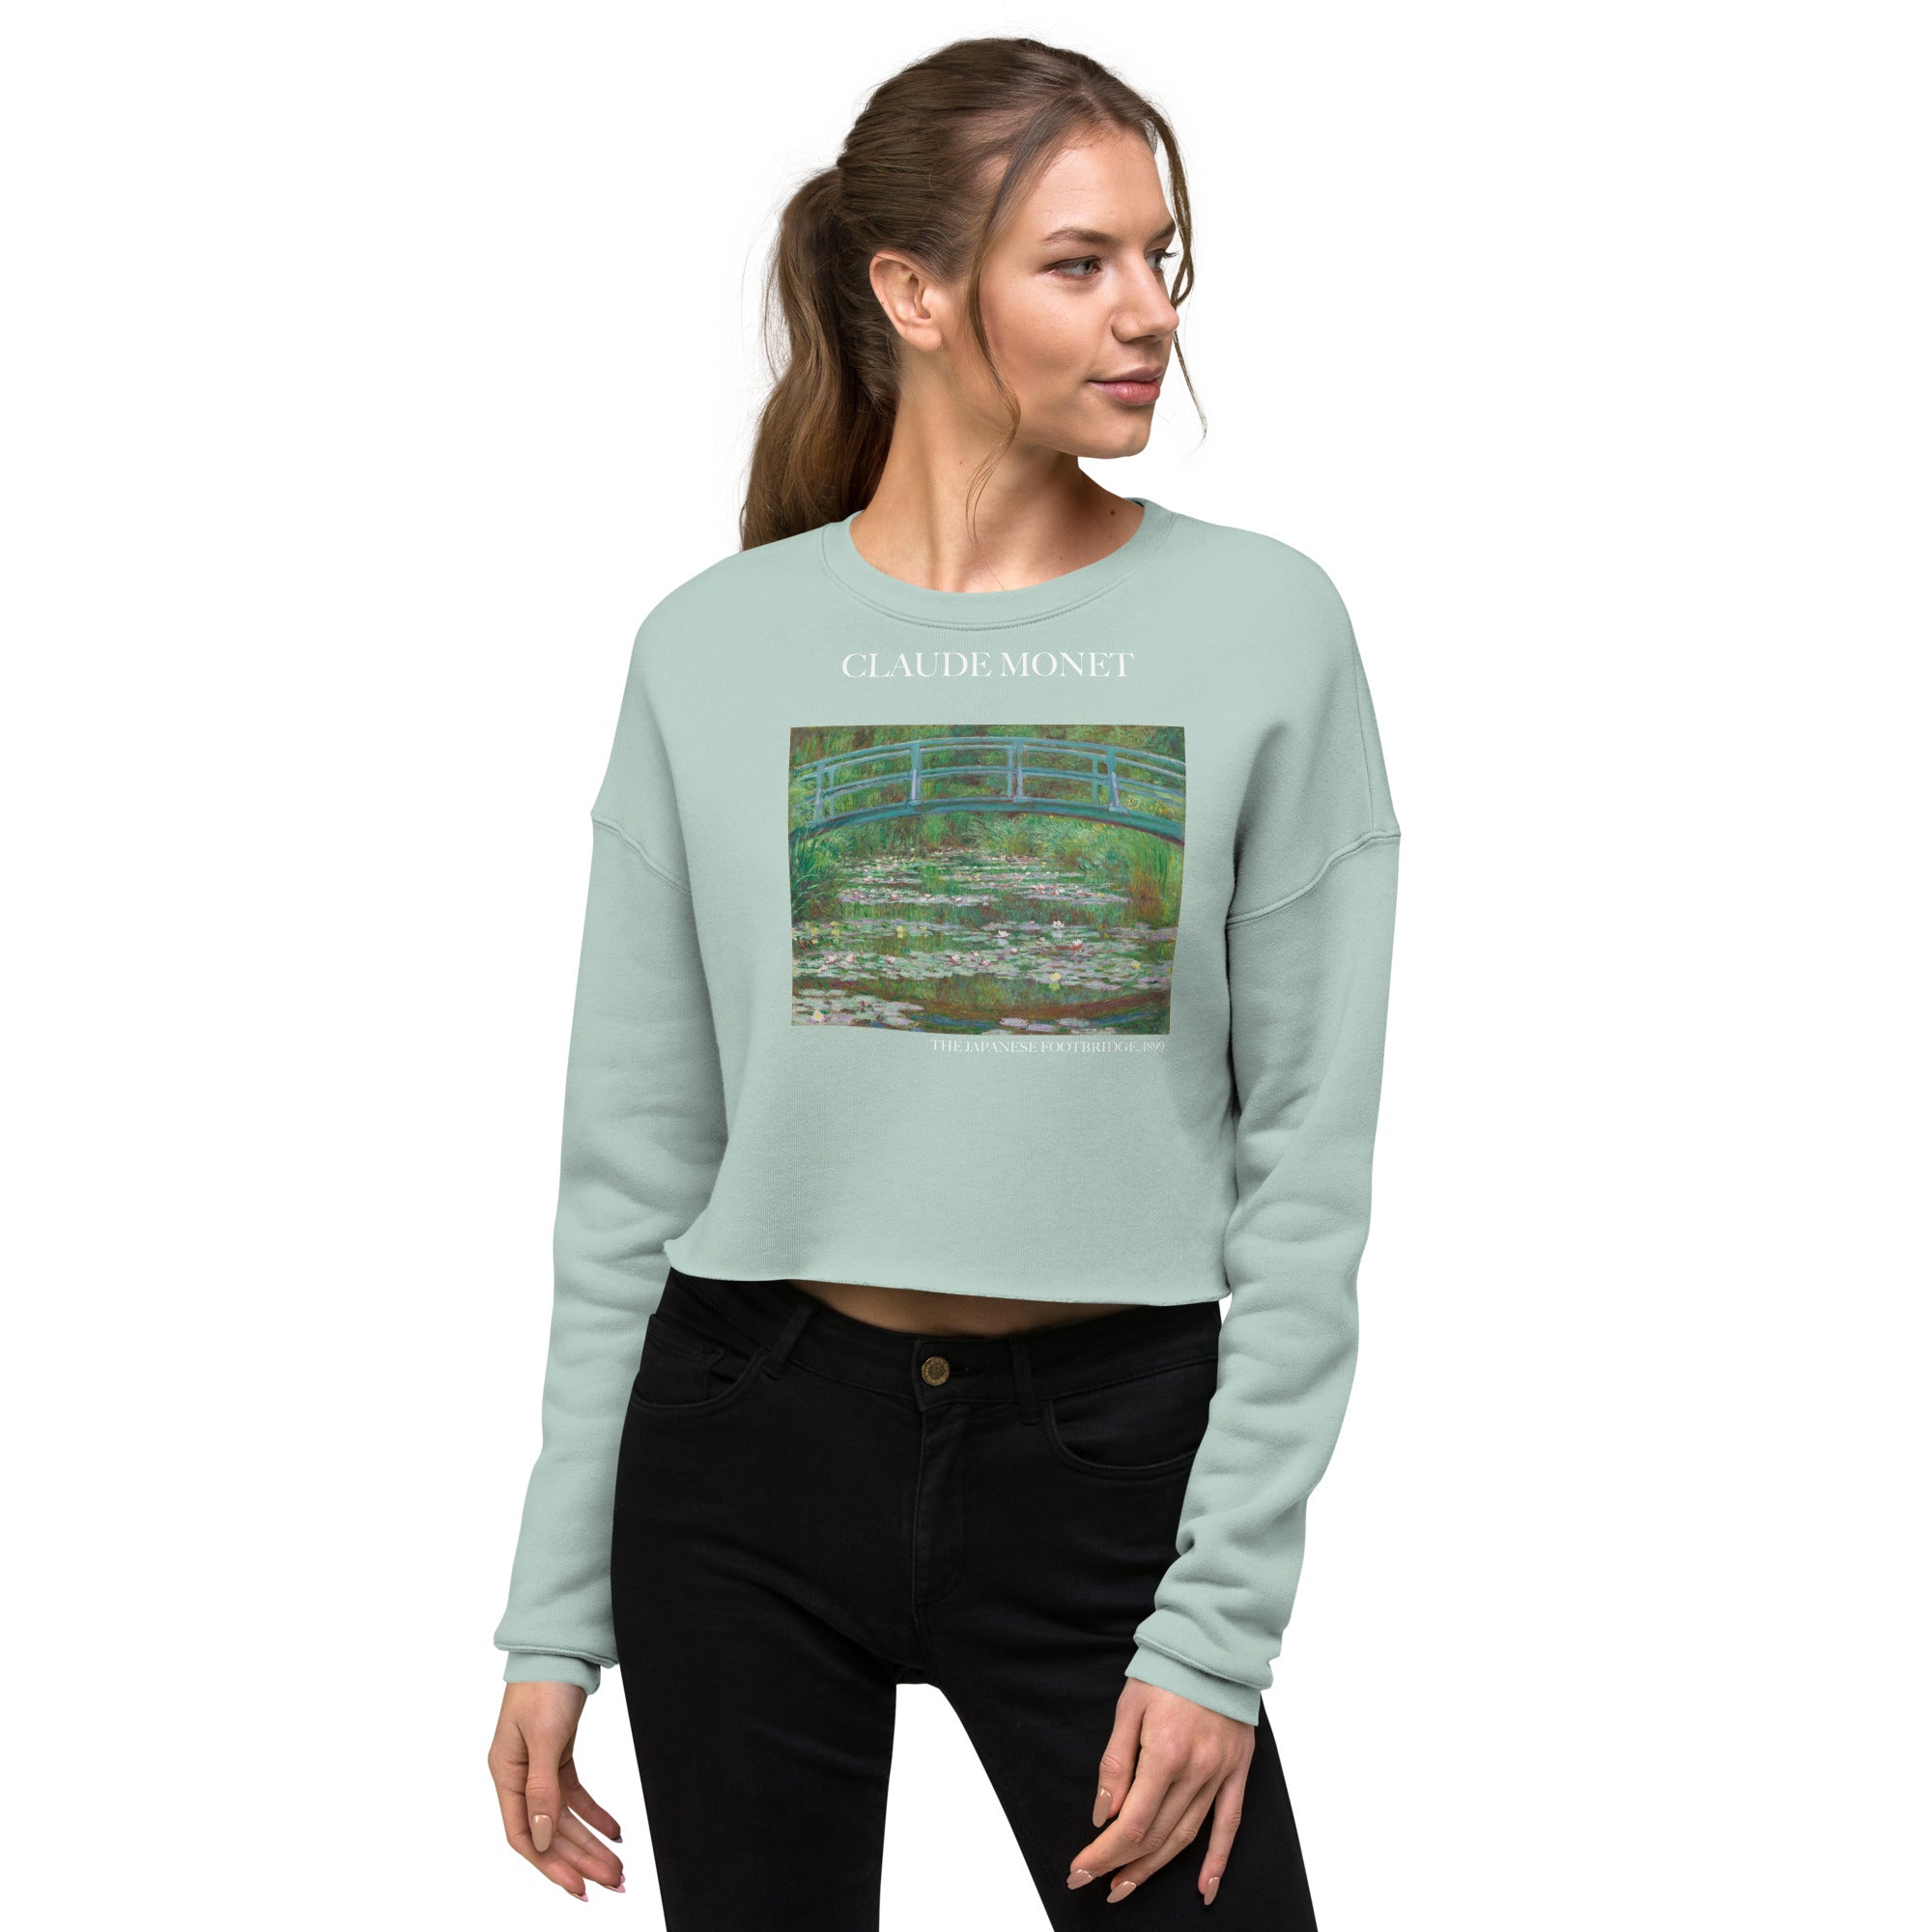 Claude Monet 'The Japanese Footbridge' Famous Painting Cropped Sweatshirt | Premium Art Cropped Sweatshirt